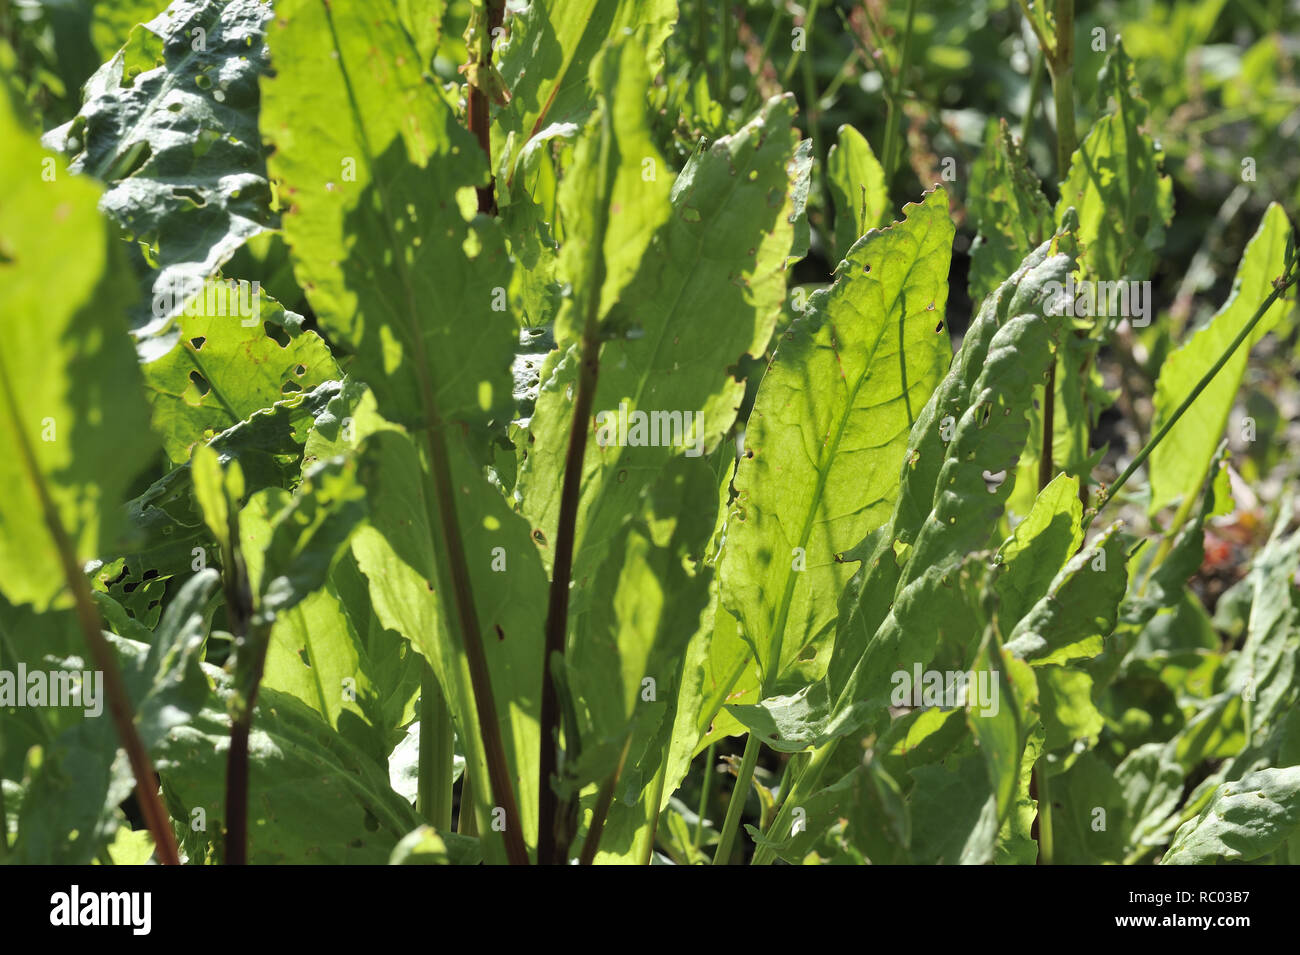 Wiesen-Sauerampfer, Rumex acetosa | Rumex acetosa, Common or Garden sorrel Stock Photo